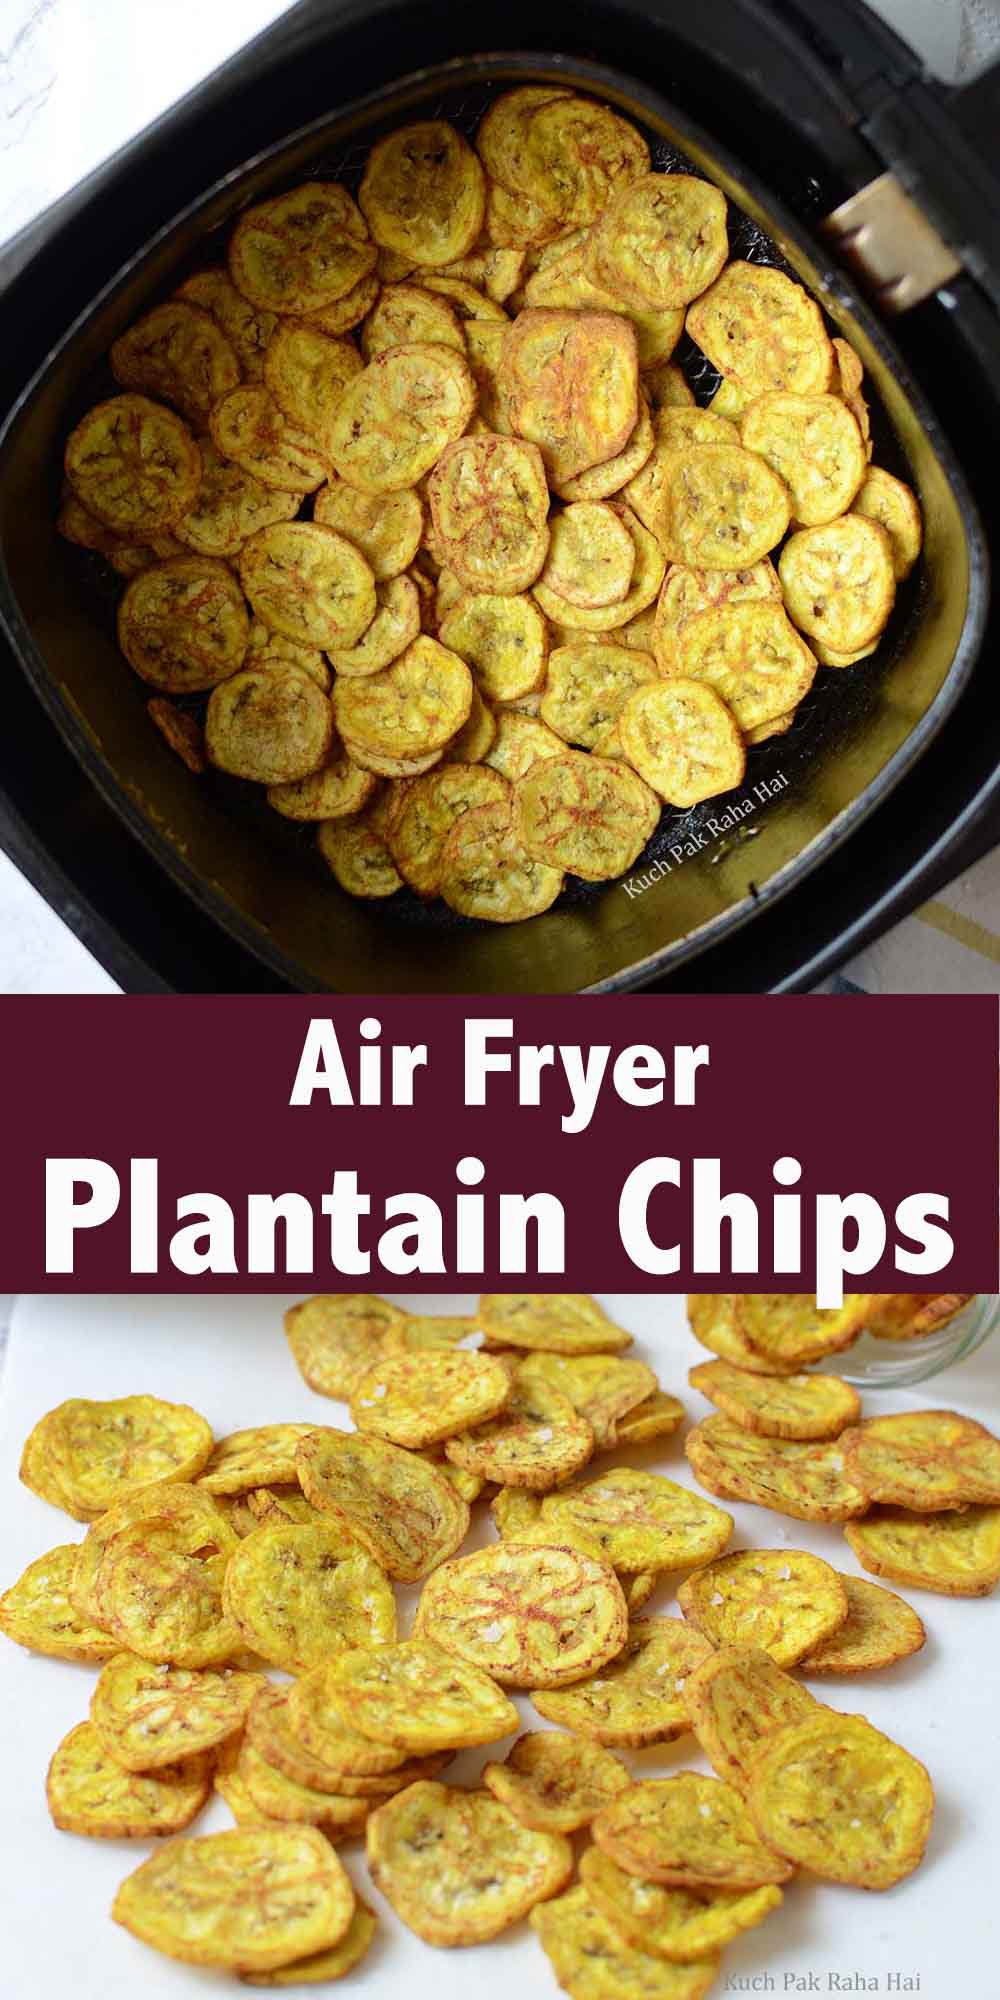 Air Fryer Plantain Chips Banana Chips Recipe.